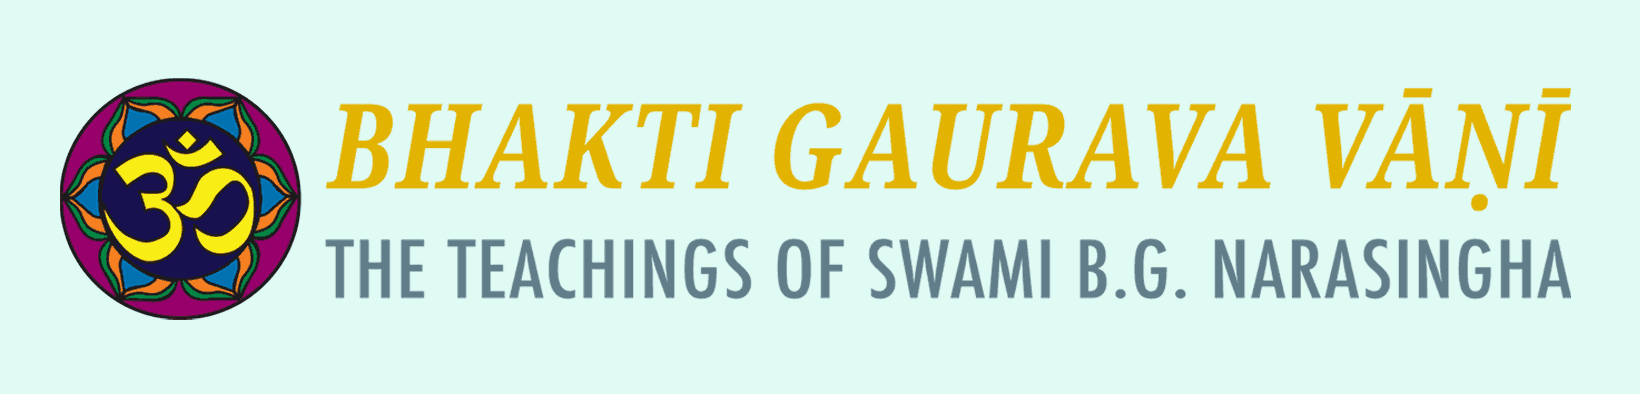 Bhakti Gaurava Vani - The Teachings of Swami B.G. Narasingha